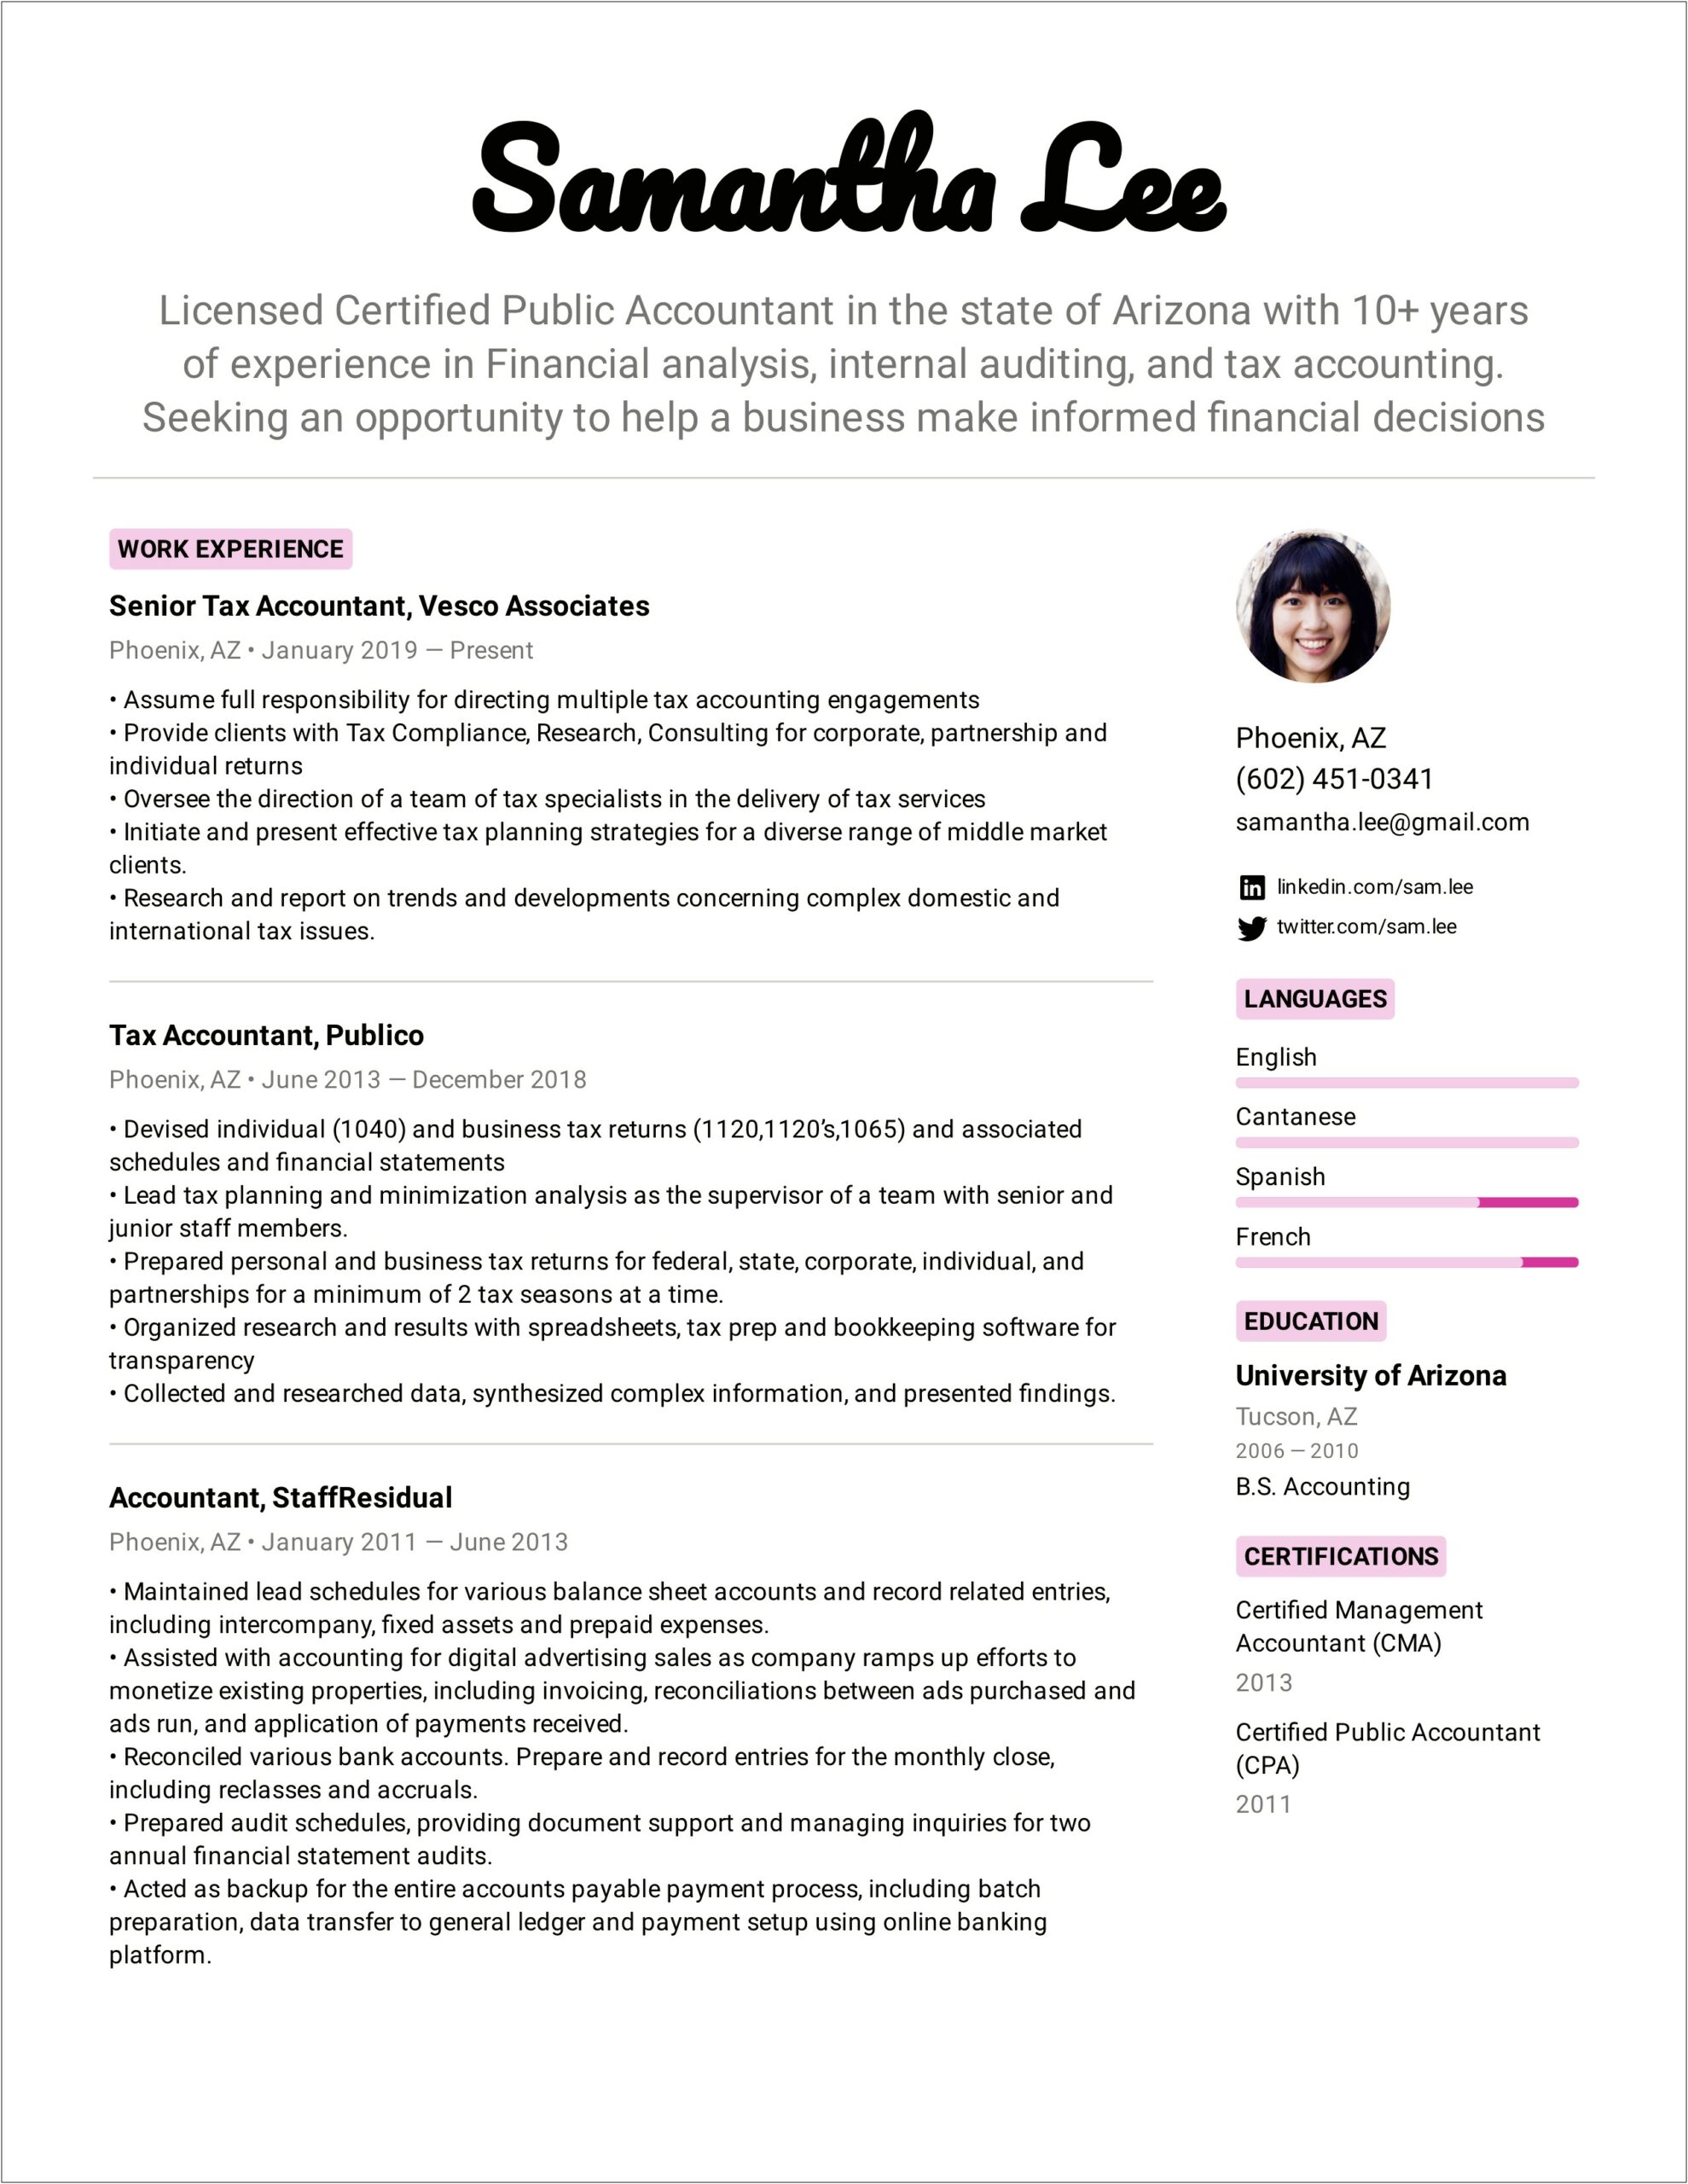 Tax Consultant Job Description For Resume